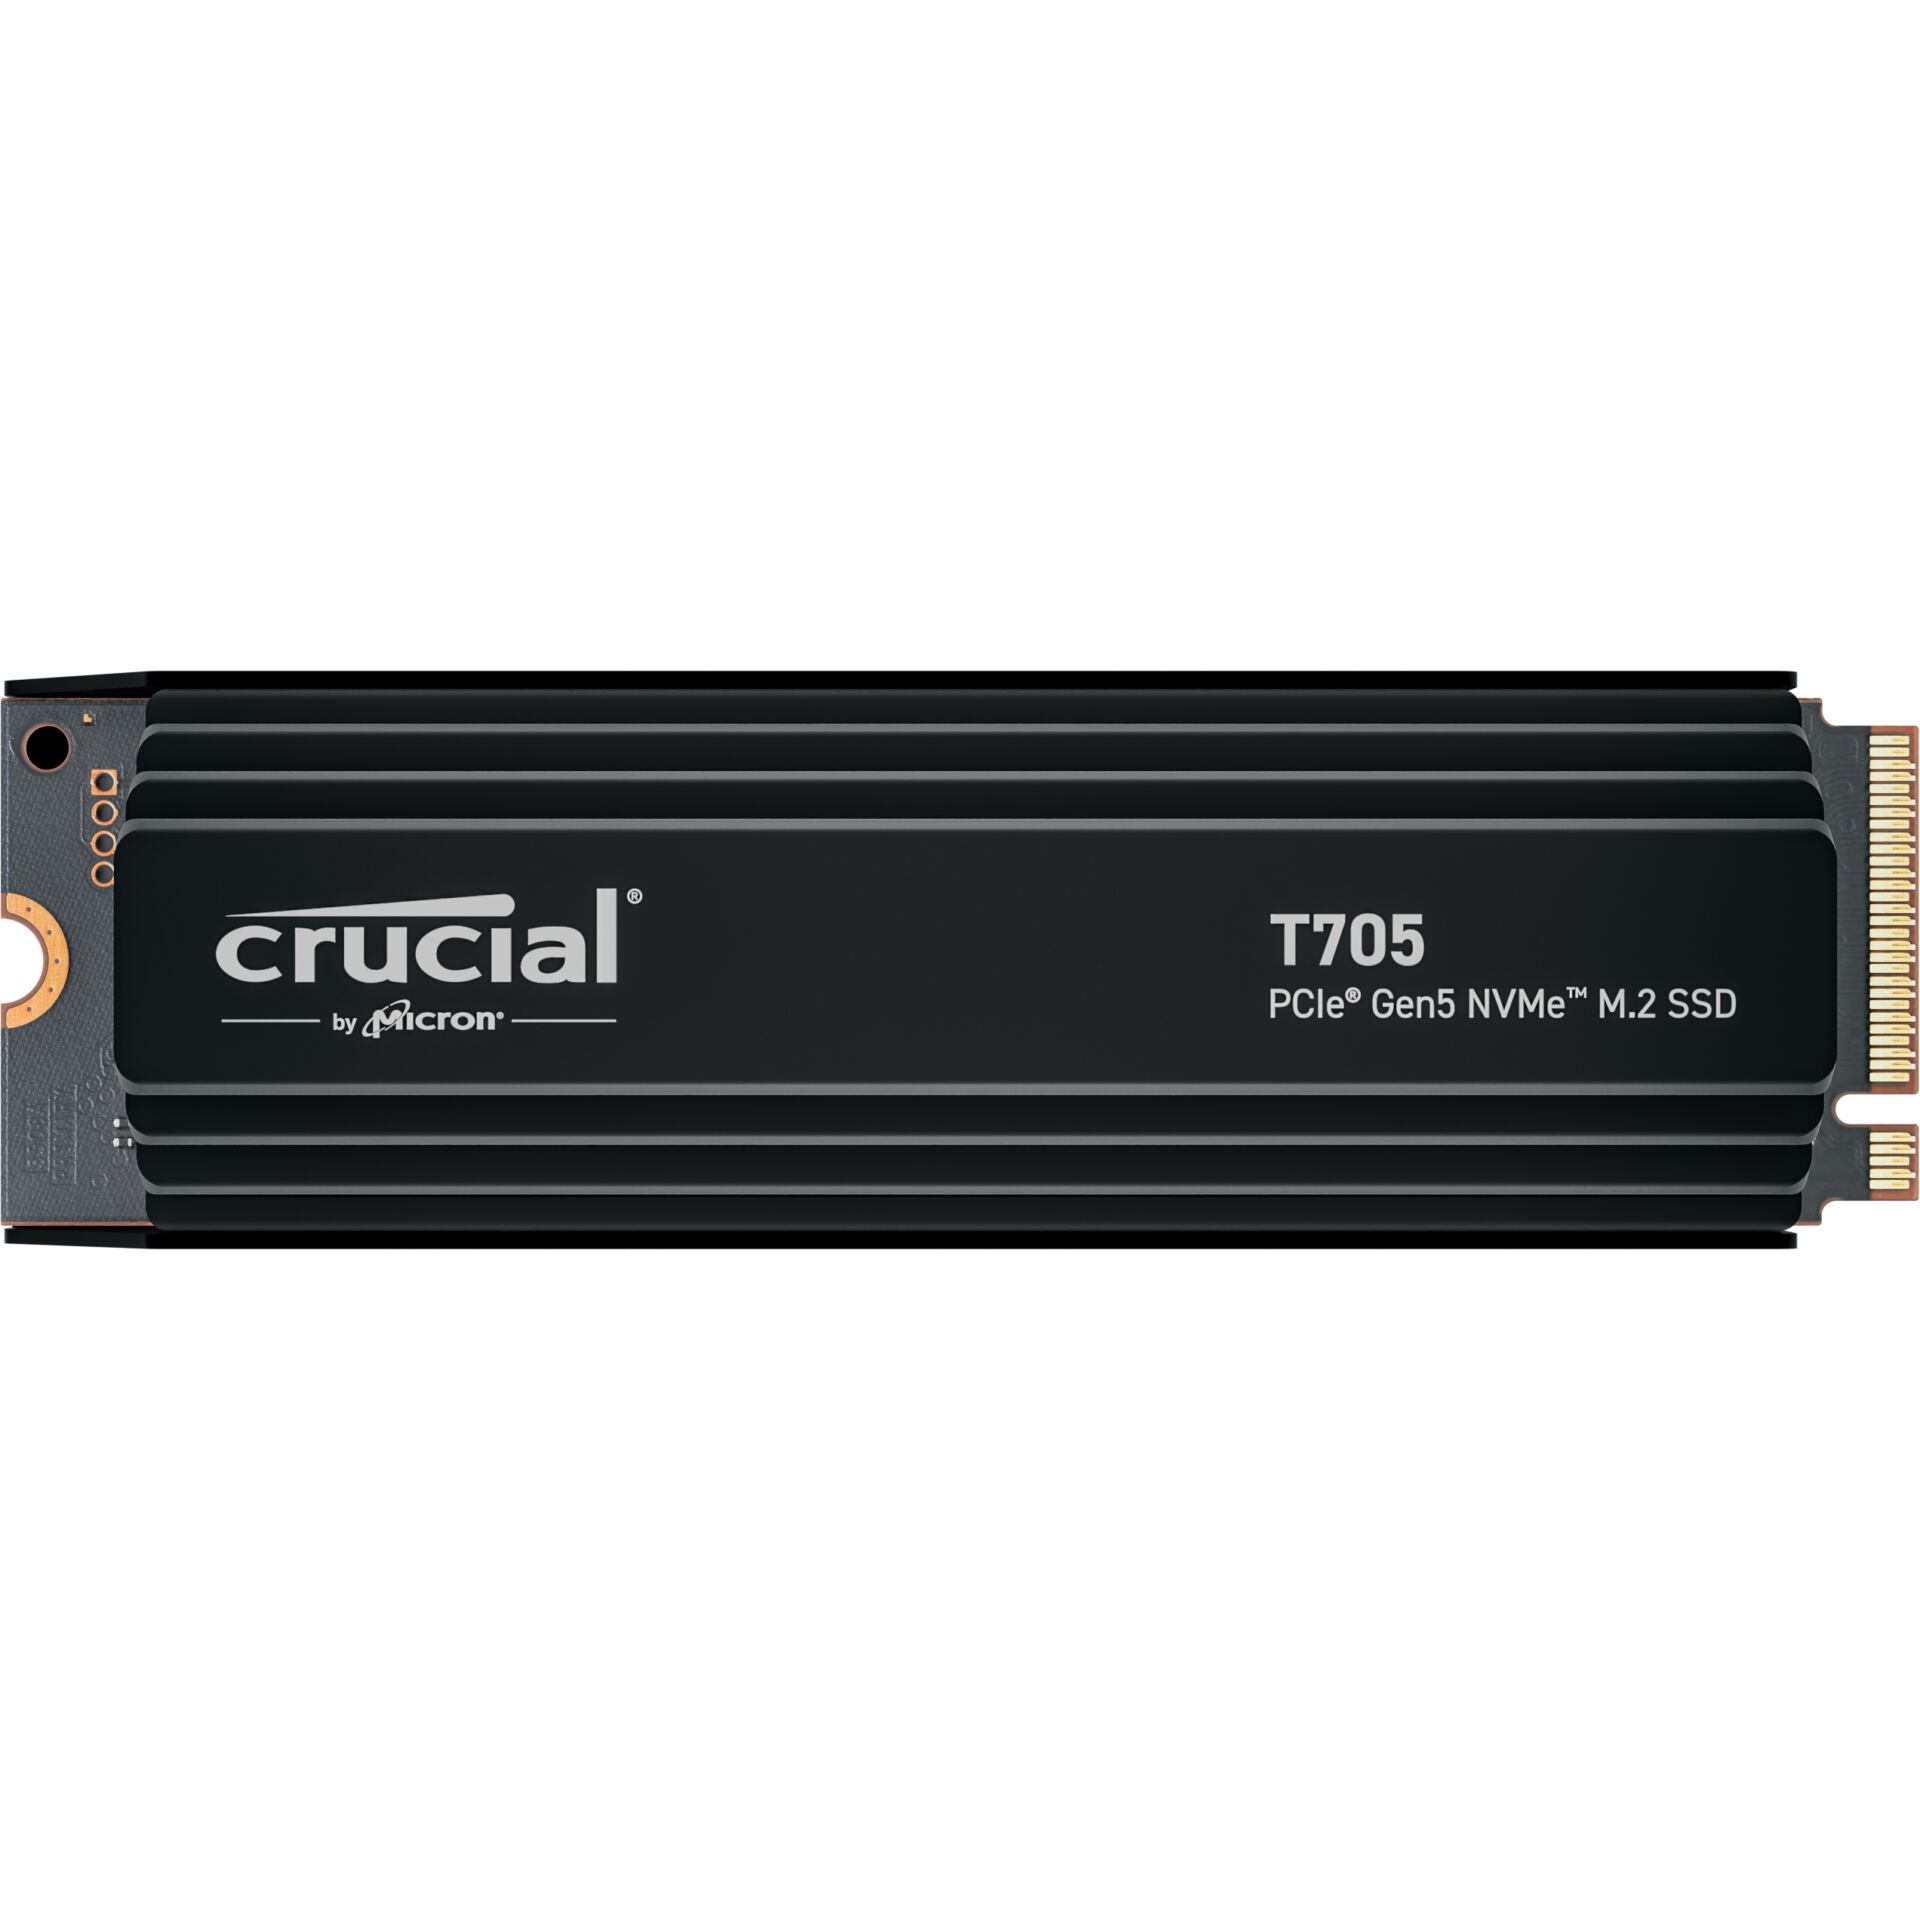 Crucial T705 with heatsink   4TB PCIe Gen5 NVMe M.2 SSD